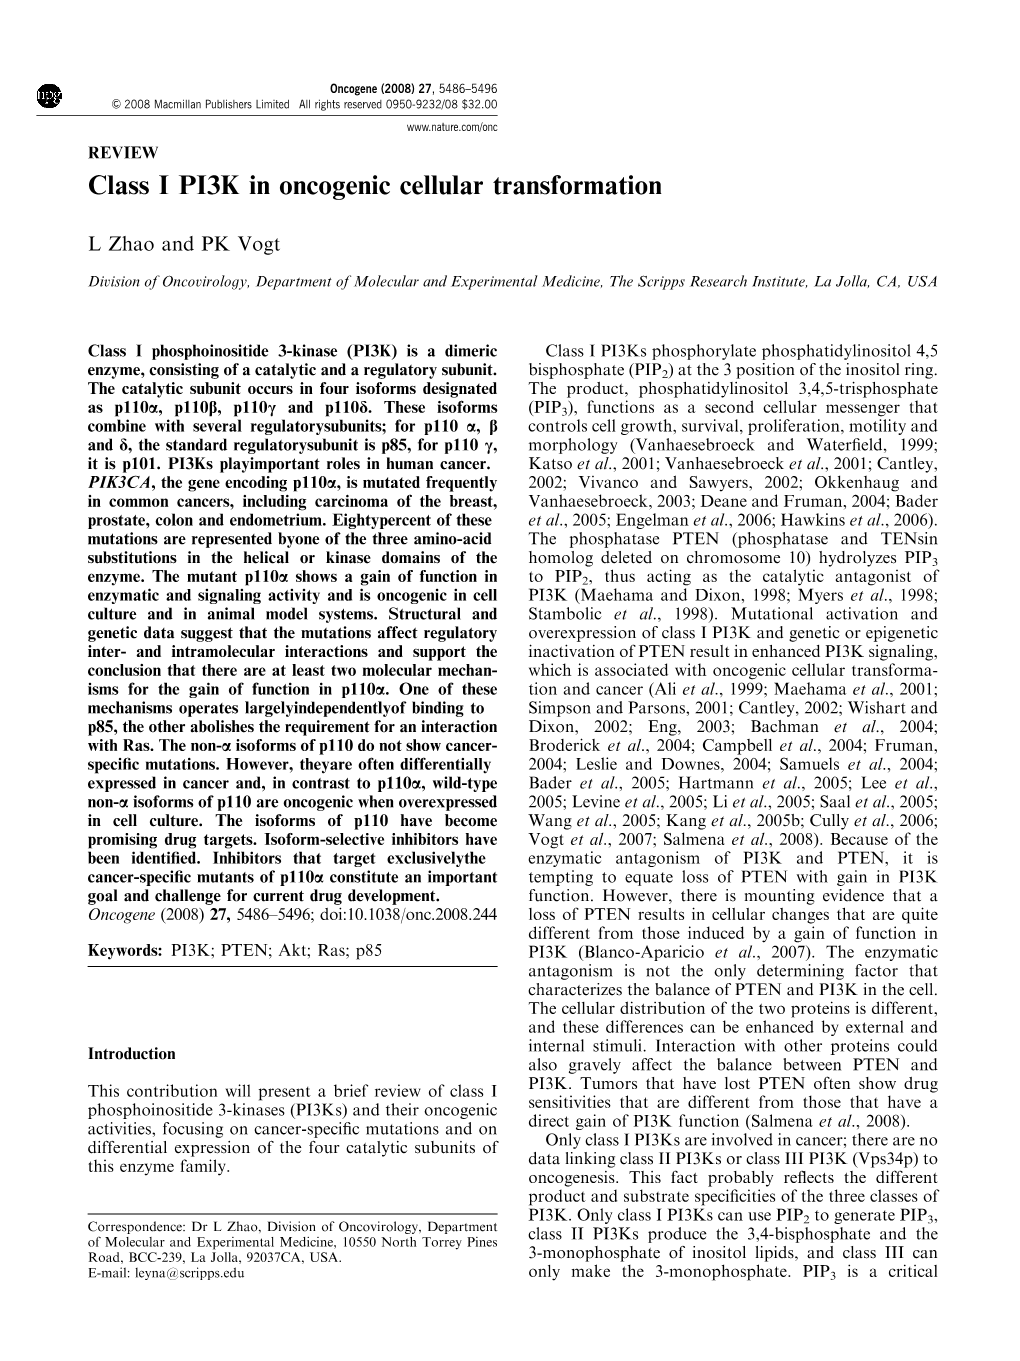 Class I PI3K in Oncogenic Cellular Transformation